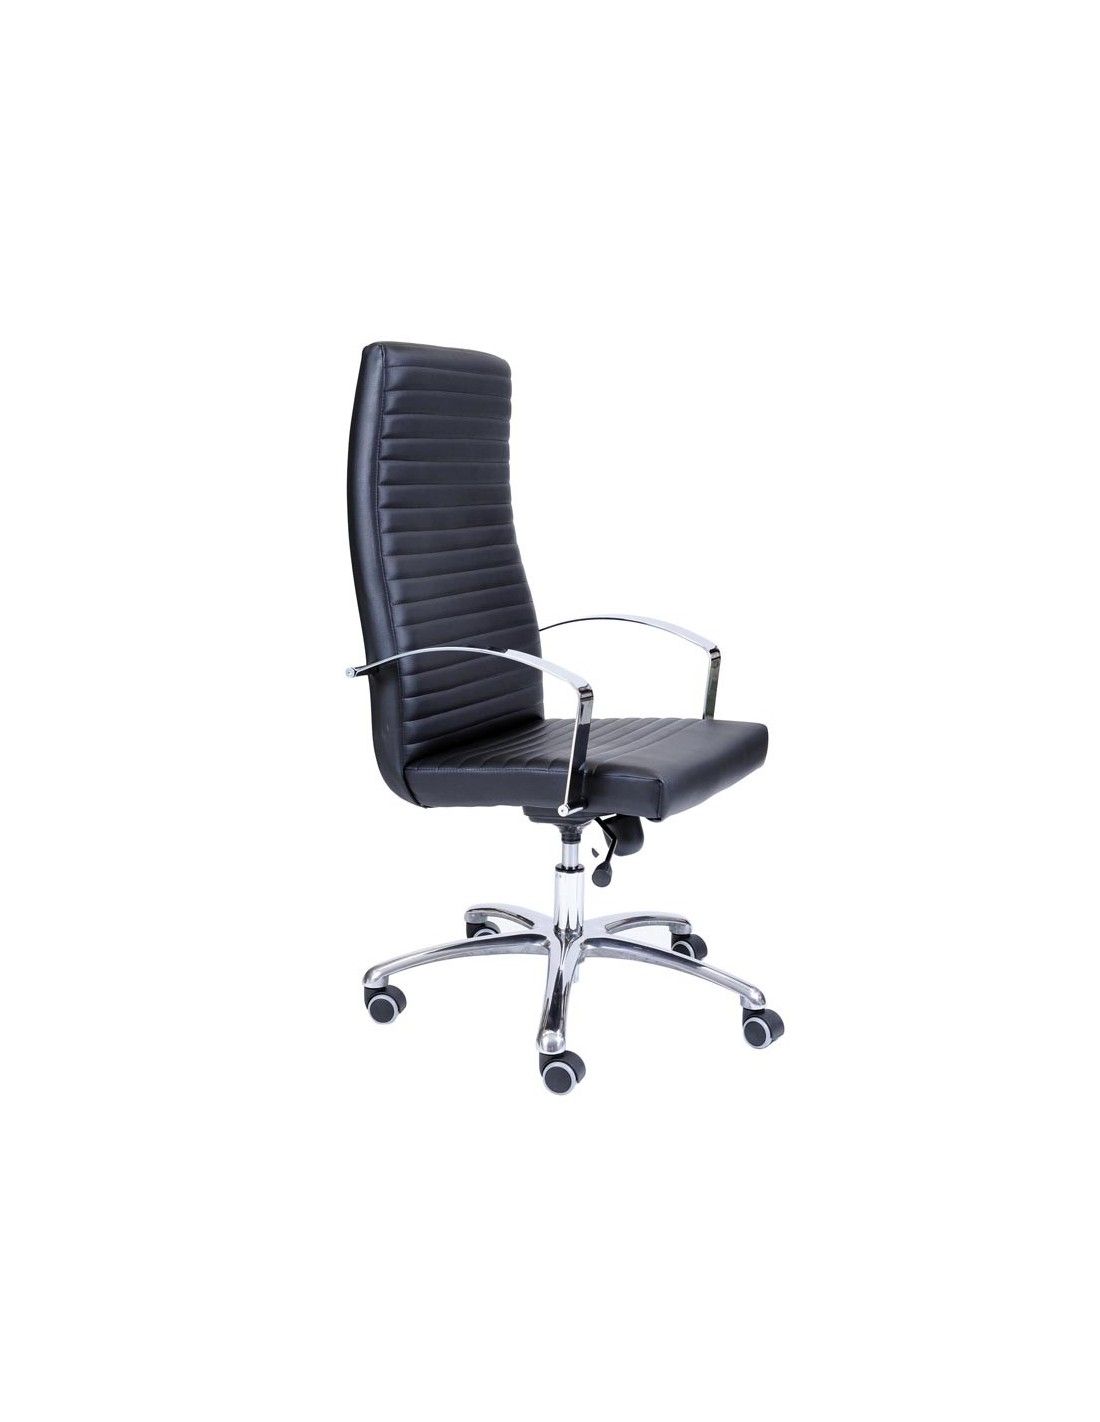 Topes para silla de oficina de Tecno-Ofiss - La Oficina Online